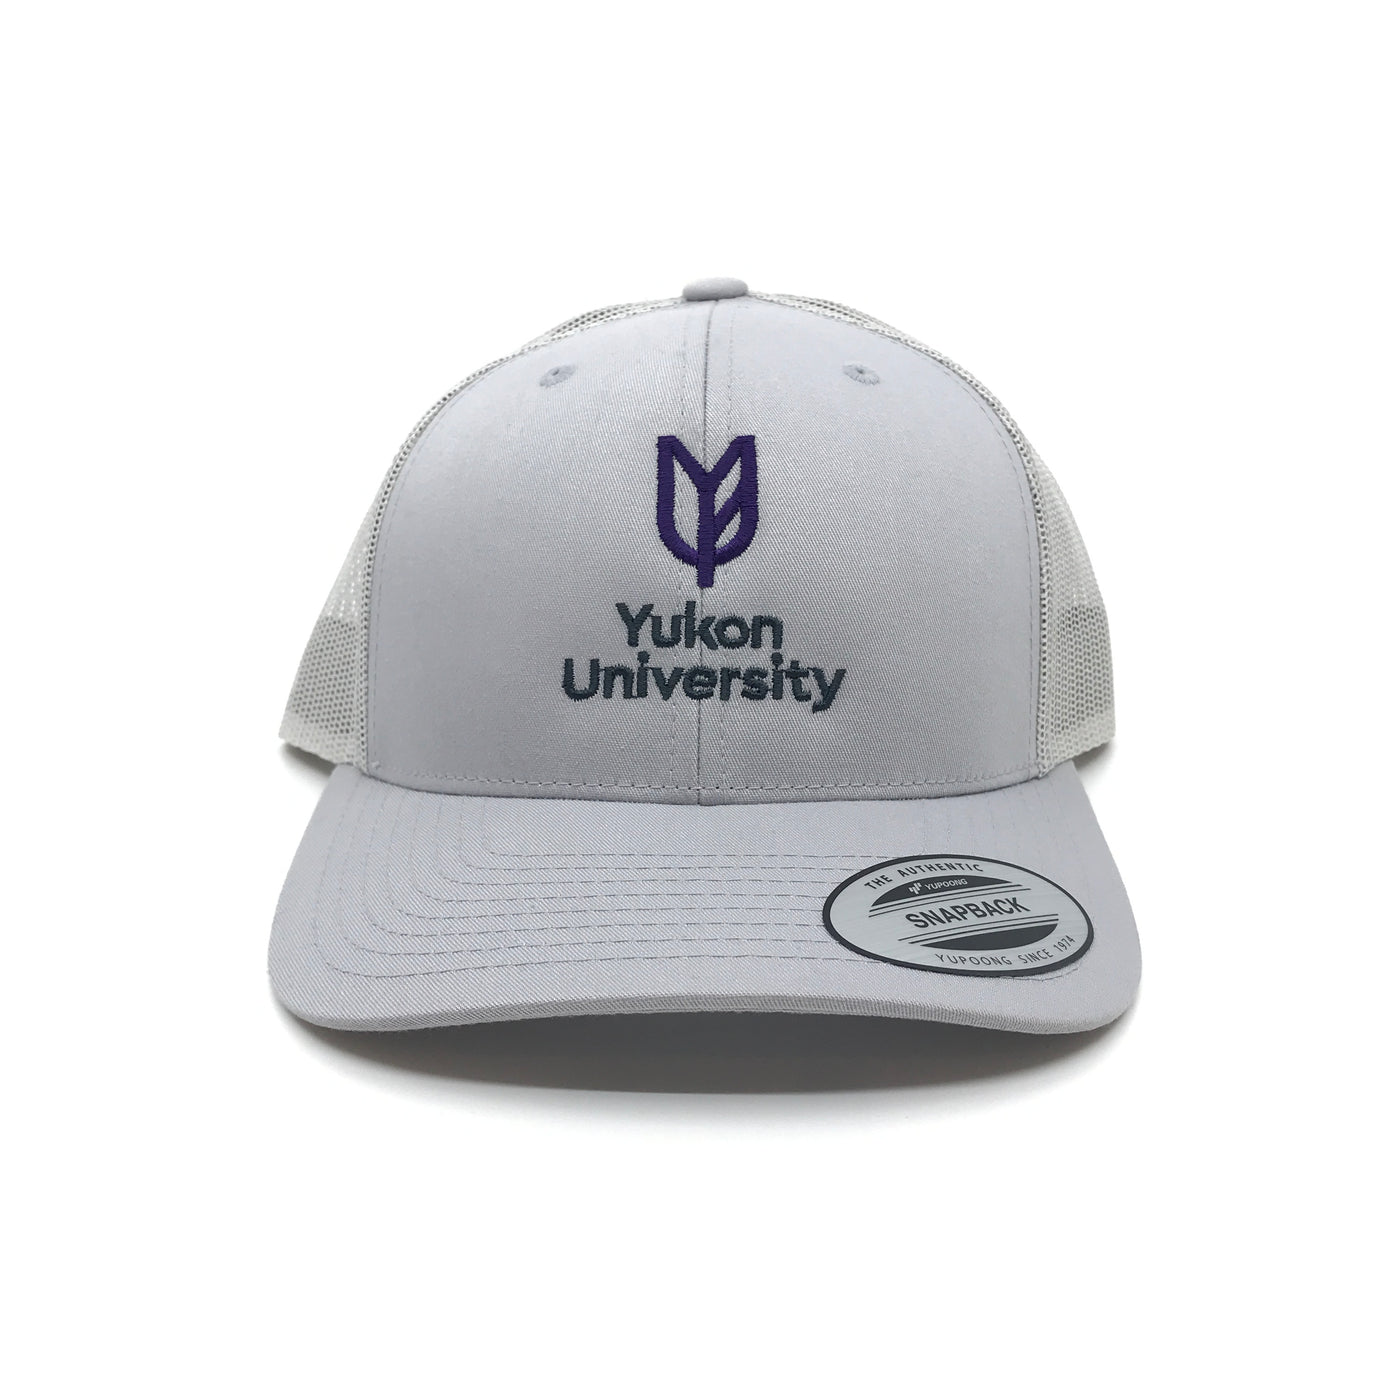 Yukon University Trucker - Silver